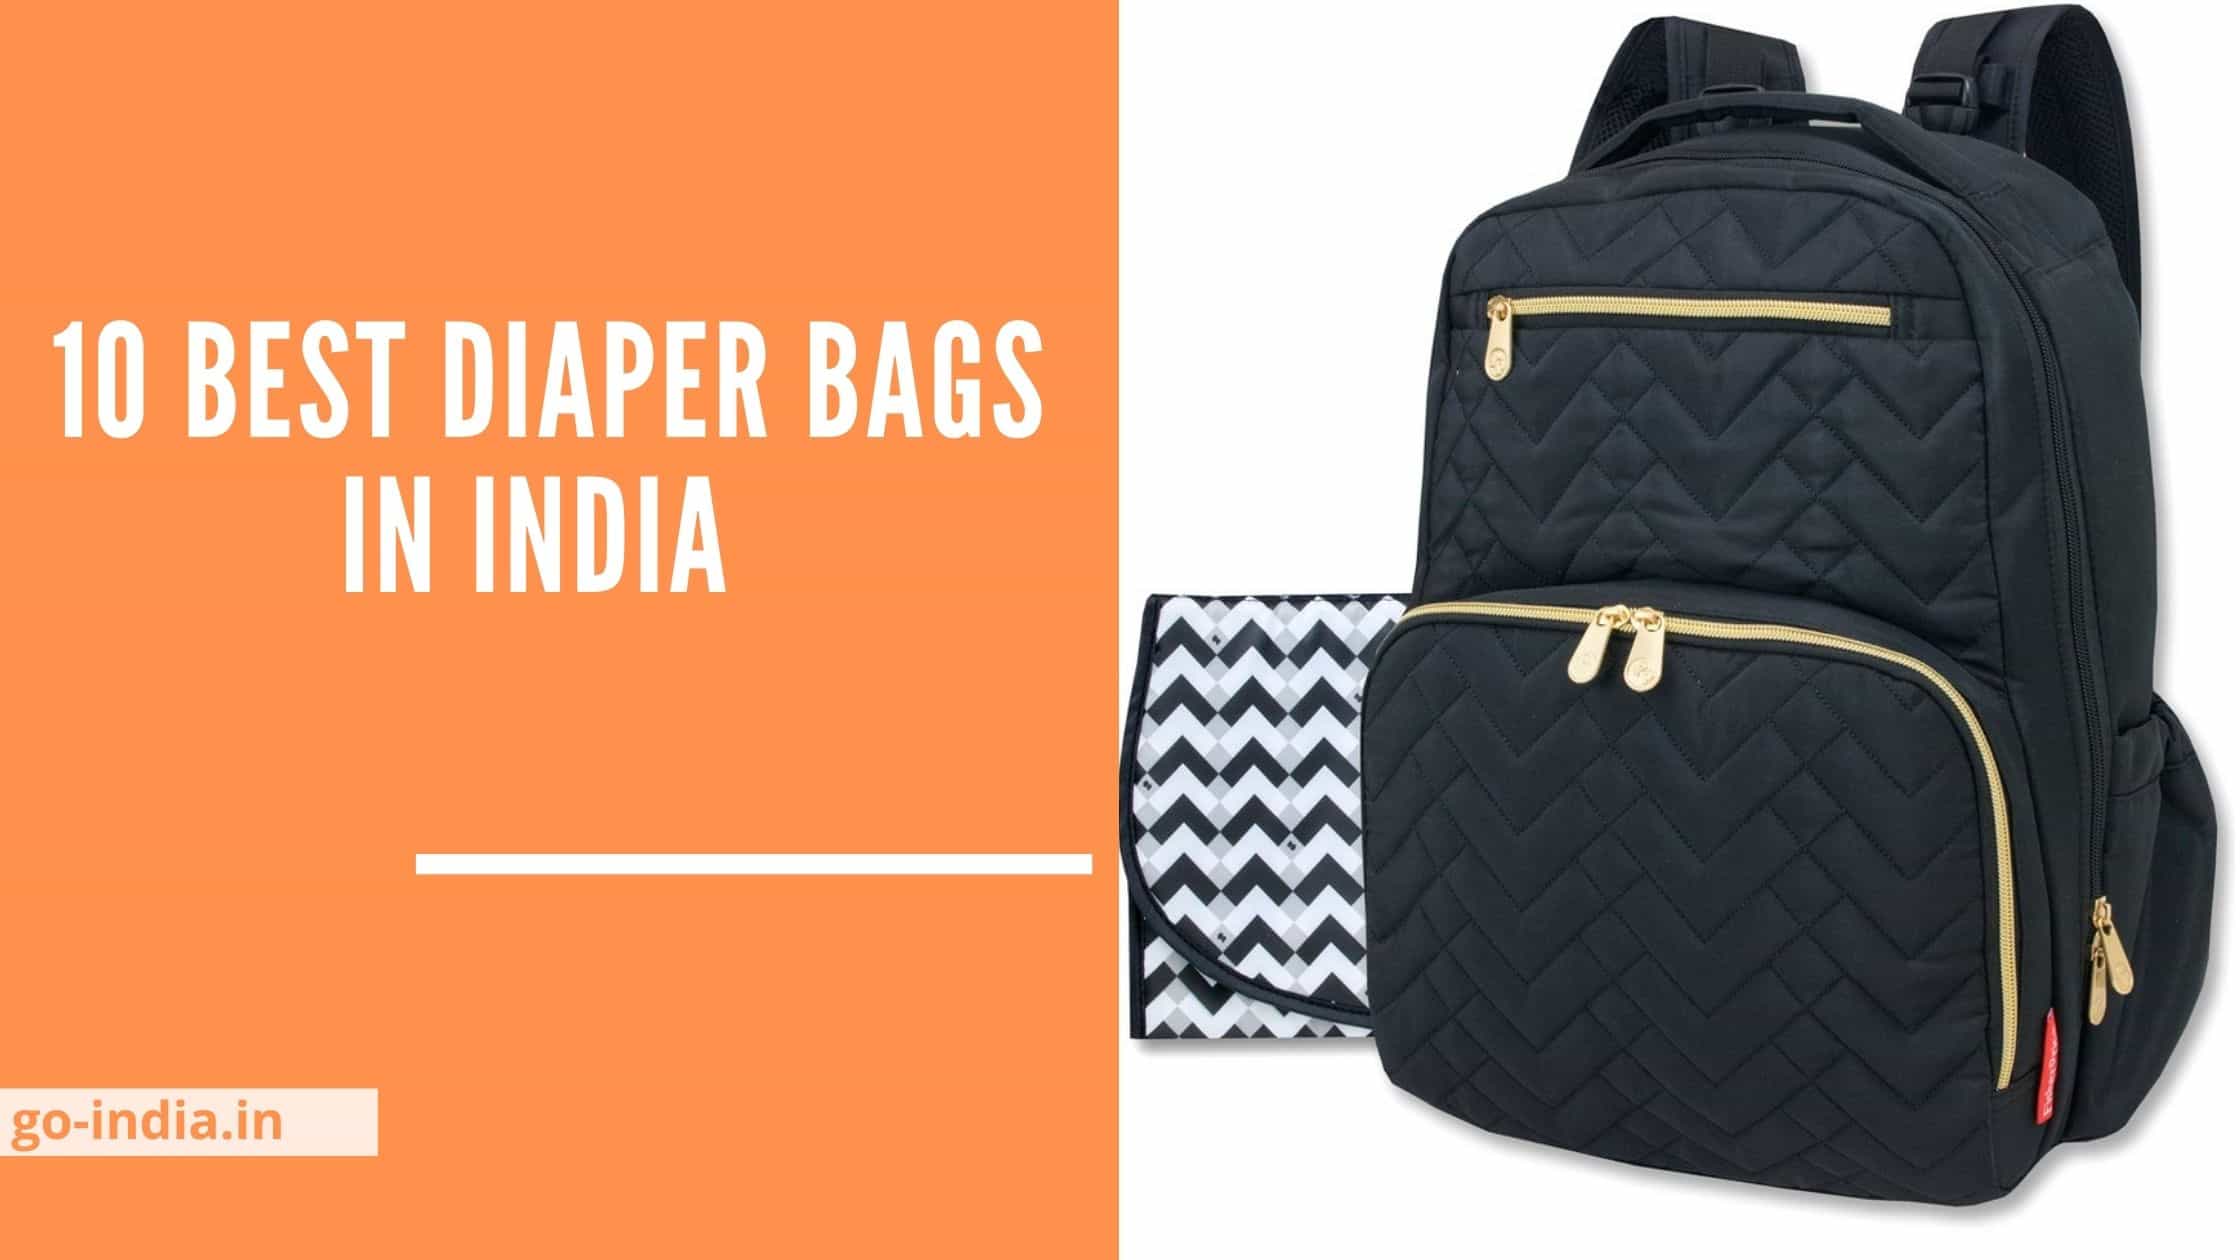 10 Best Diaper Bags in India